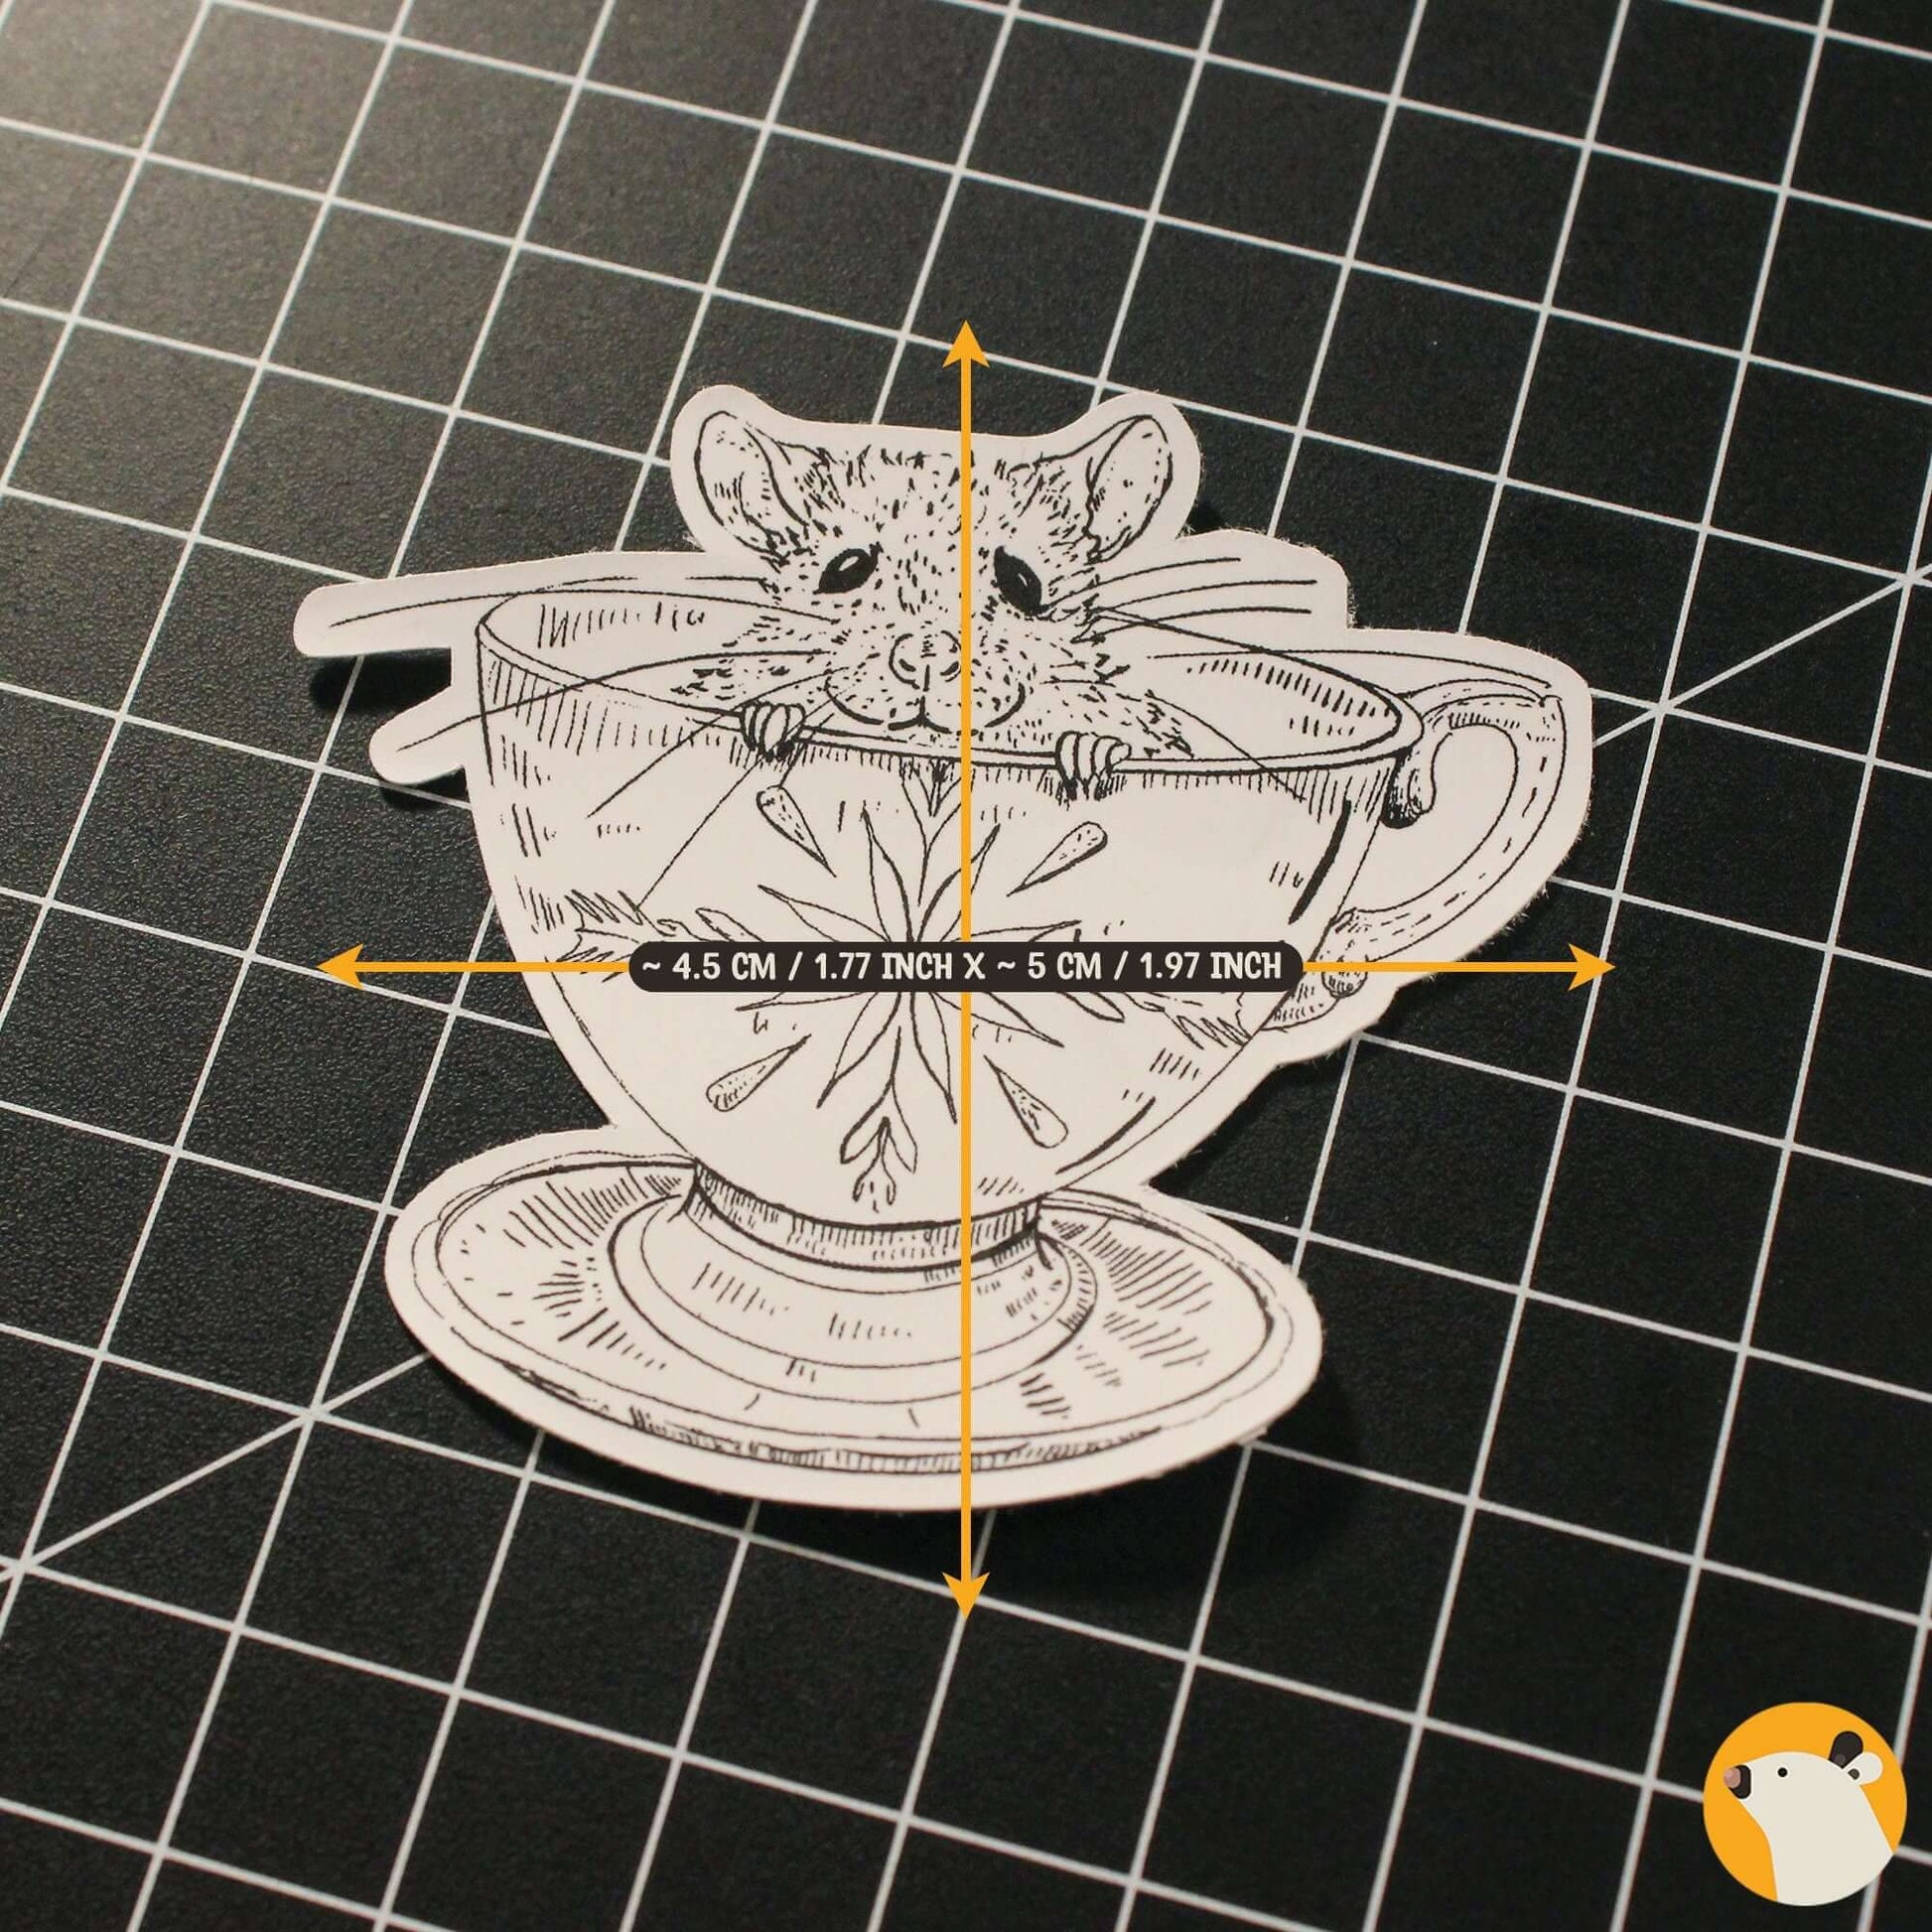 dimensions of hand drawn matt ink rat designer sticker